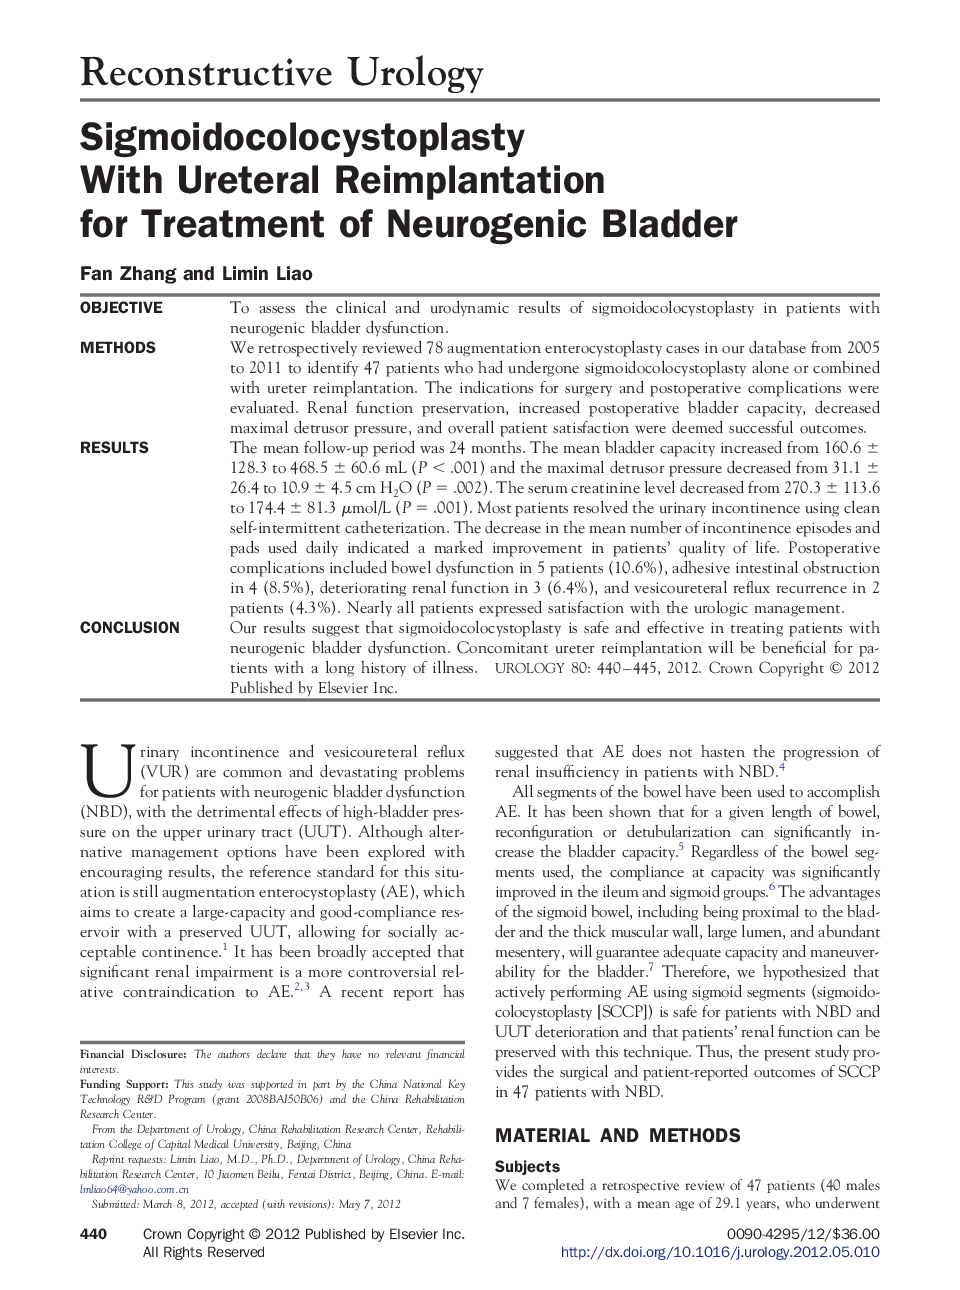 Sigmoidocolocystoplasty With Ureteral Reimplantation for Treatment of Neurogenic Bladder